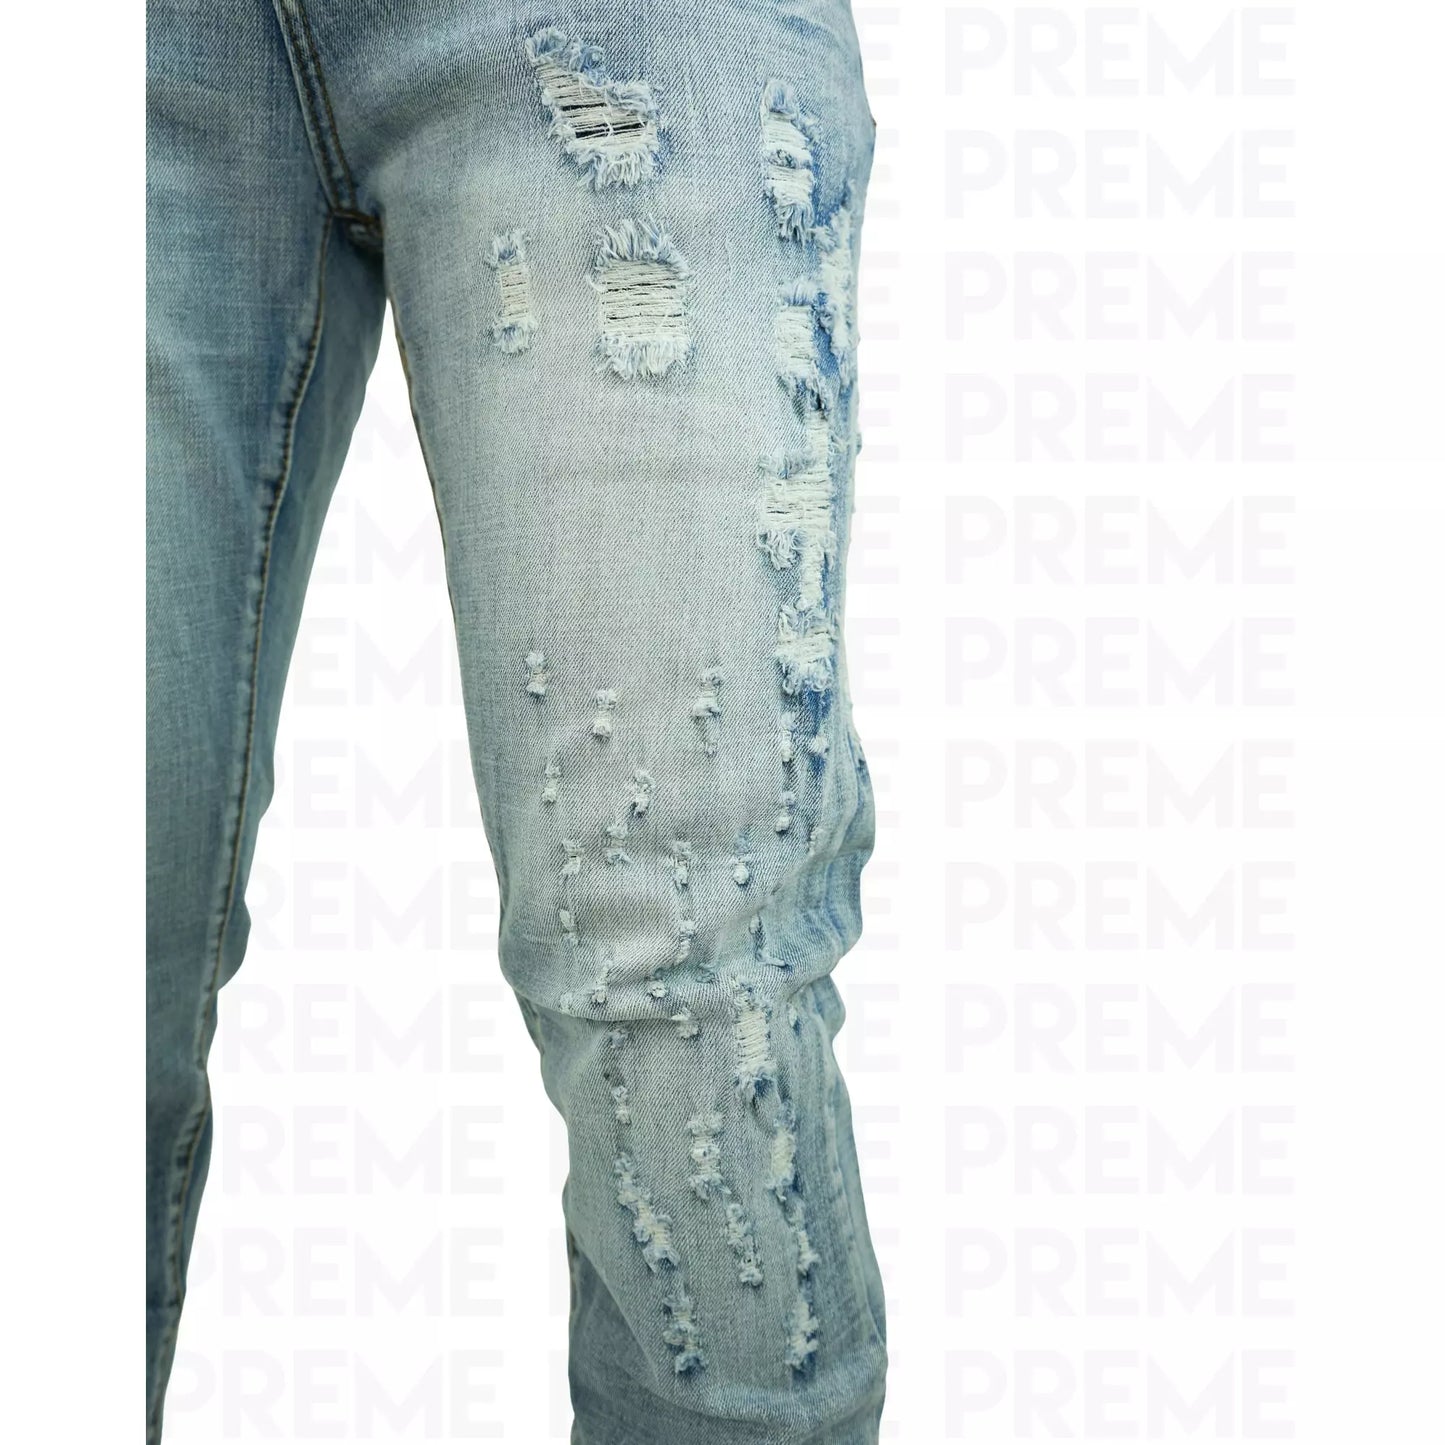 Preme Basic Indigo Denim Jeans (PR-WB-819)